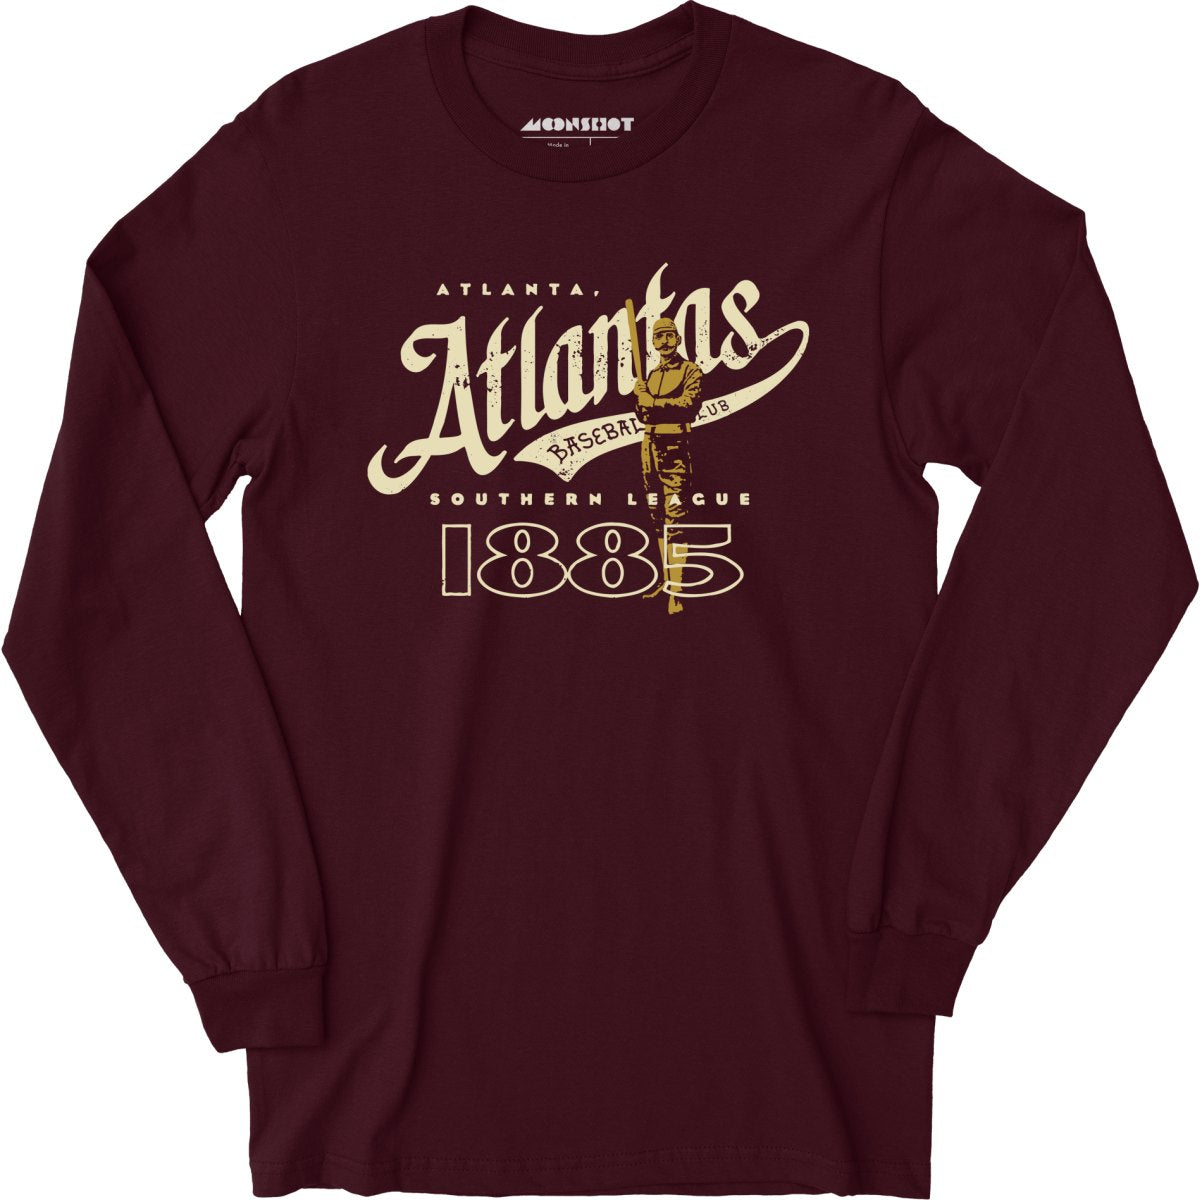 Atlanta Atlantas - Georgia - Vintage Defunct Baseball Teams - Long Sleeve T-Shirt